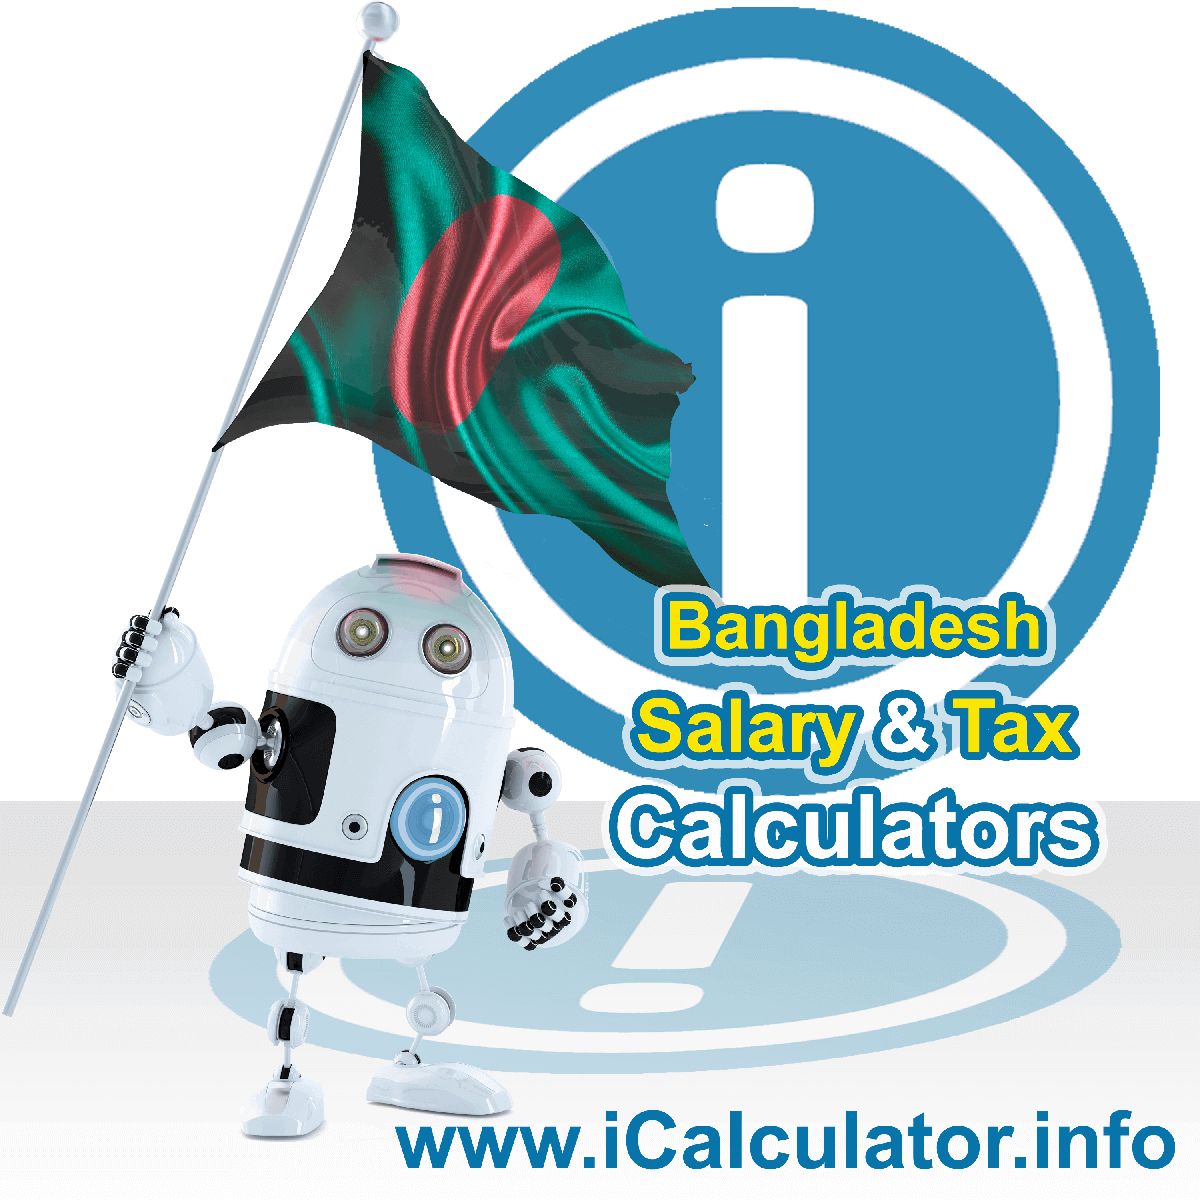 Bangladesh Wage Calculator. This image shows the Bangladesh flag and information relating to the tax formula for the Bangladesh Tax Calculator